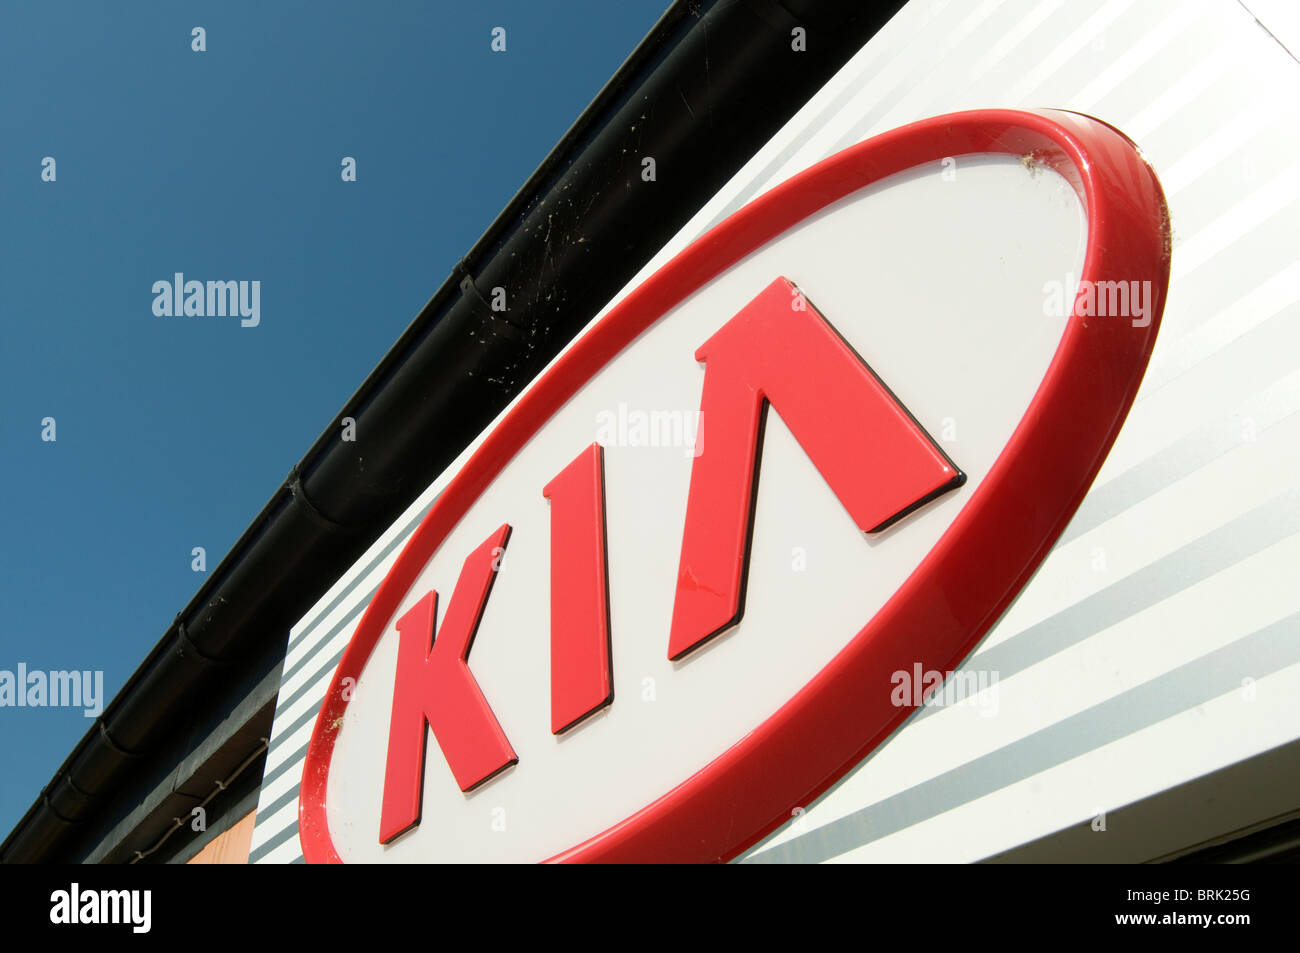 Kia Süd Korea Korea Auto Hersteller Hersteller Markenlogo branding Abzeichen Logos billige Autos Händler Autohaus Autohäuser Stockfoto